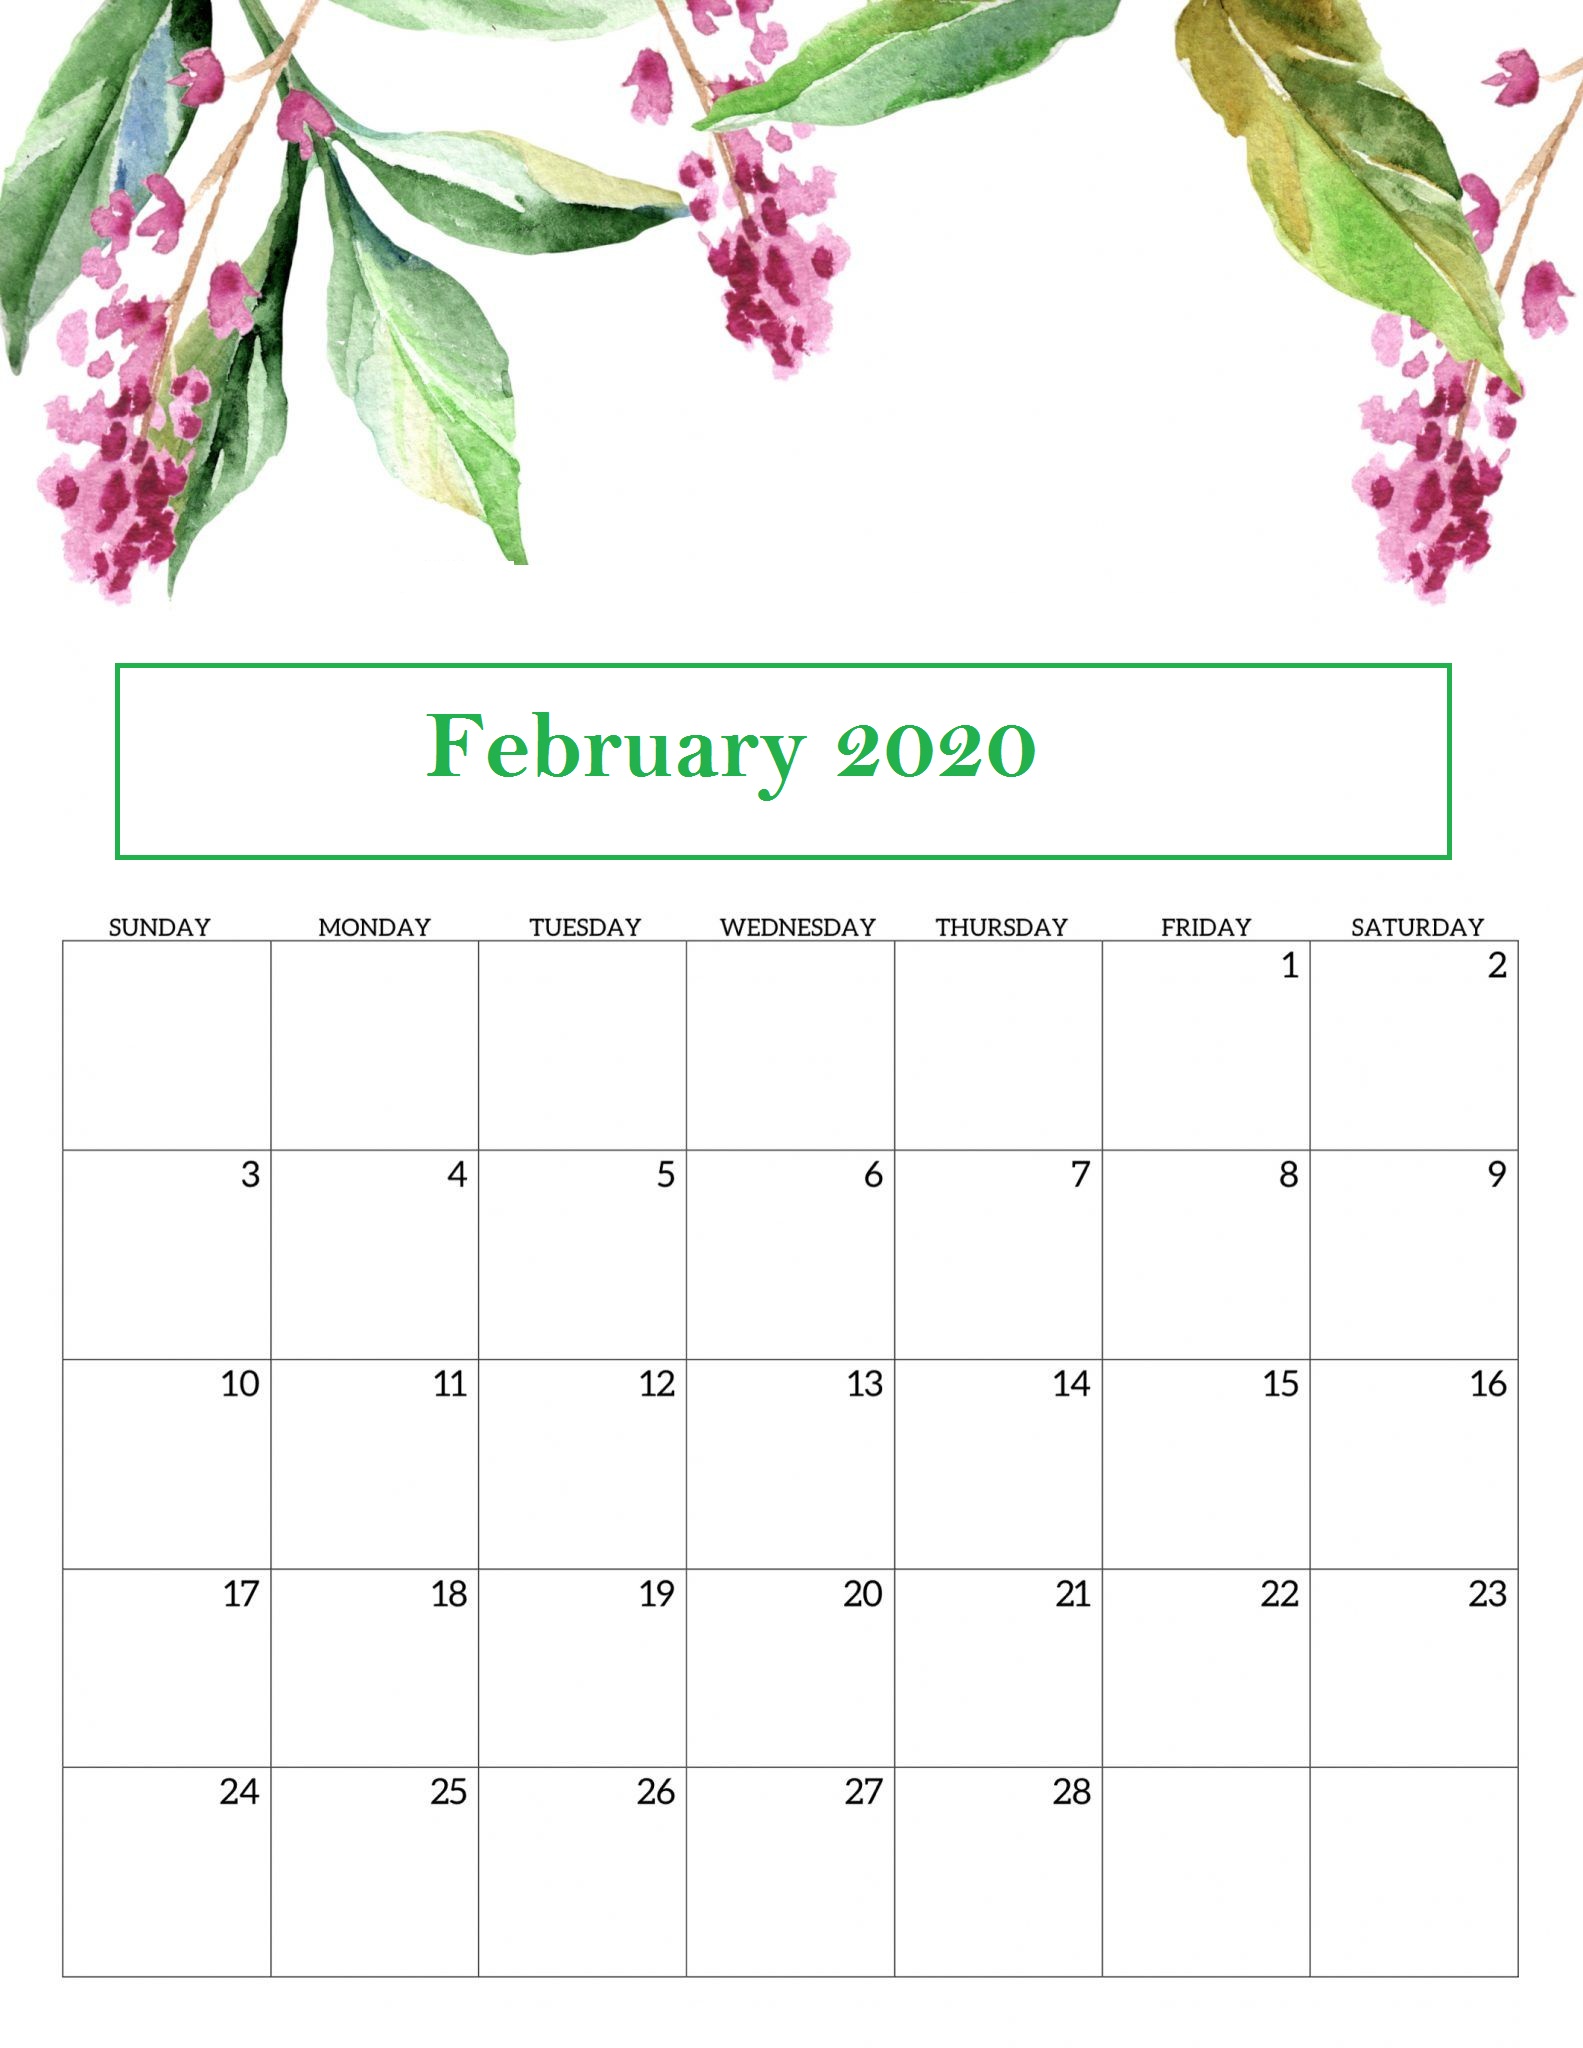 Floral February Calendar Wallpaper For Desktop iPhone Laptop